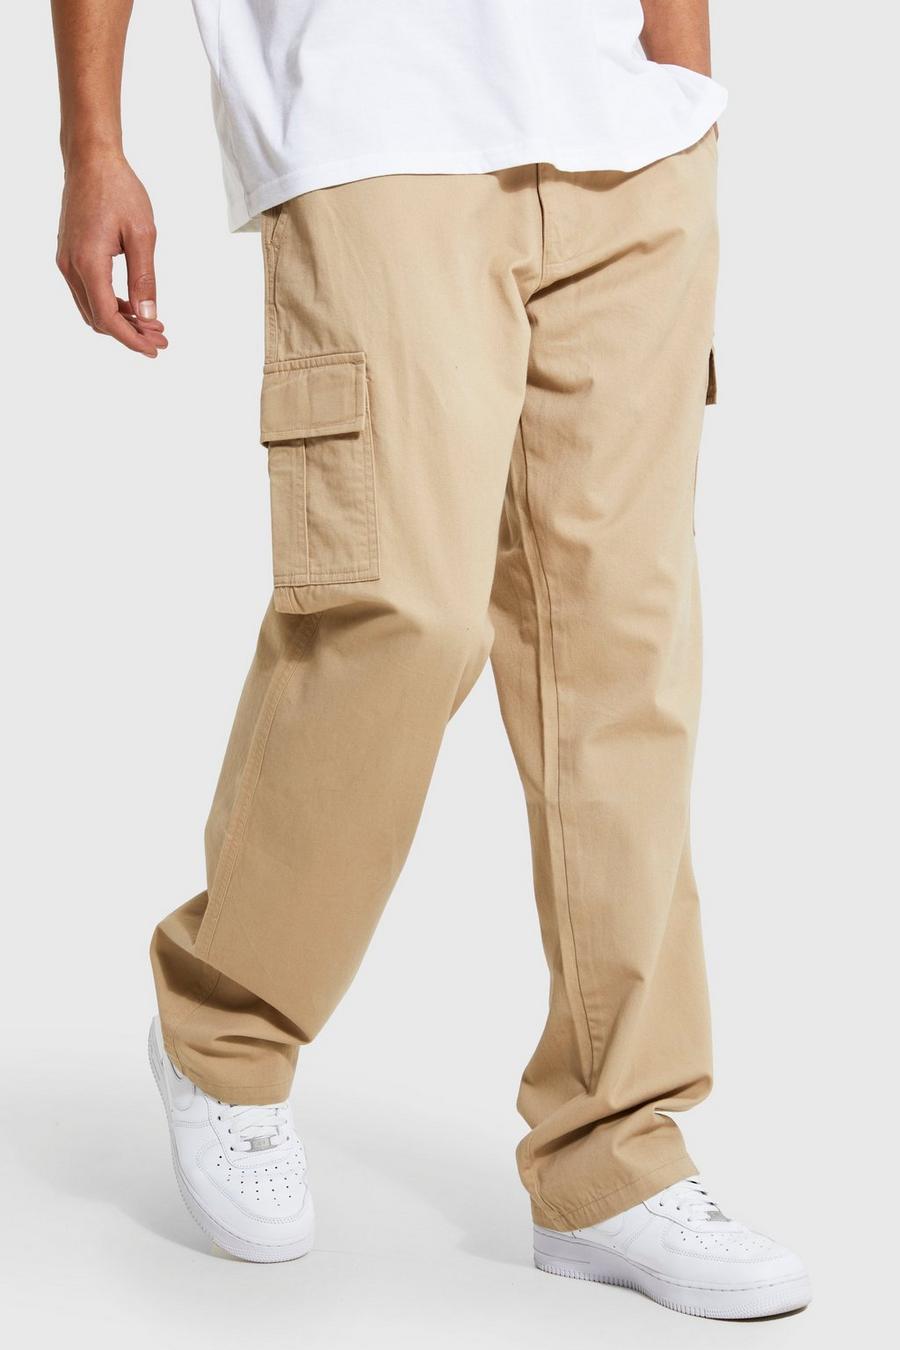 Tall Mens Cargo Pants